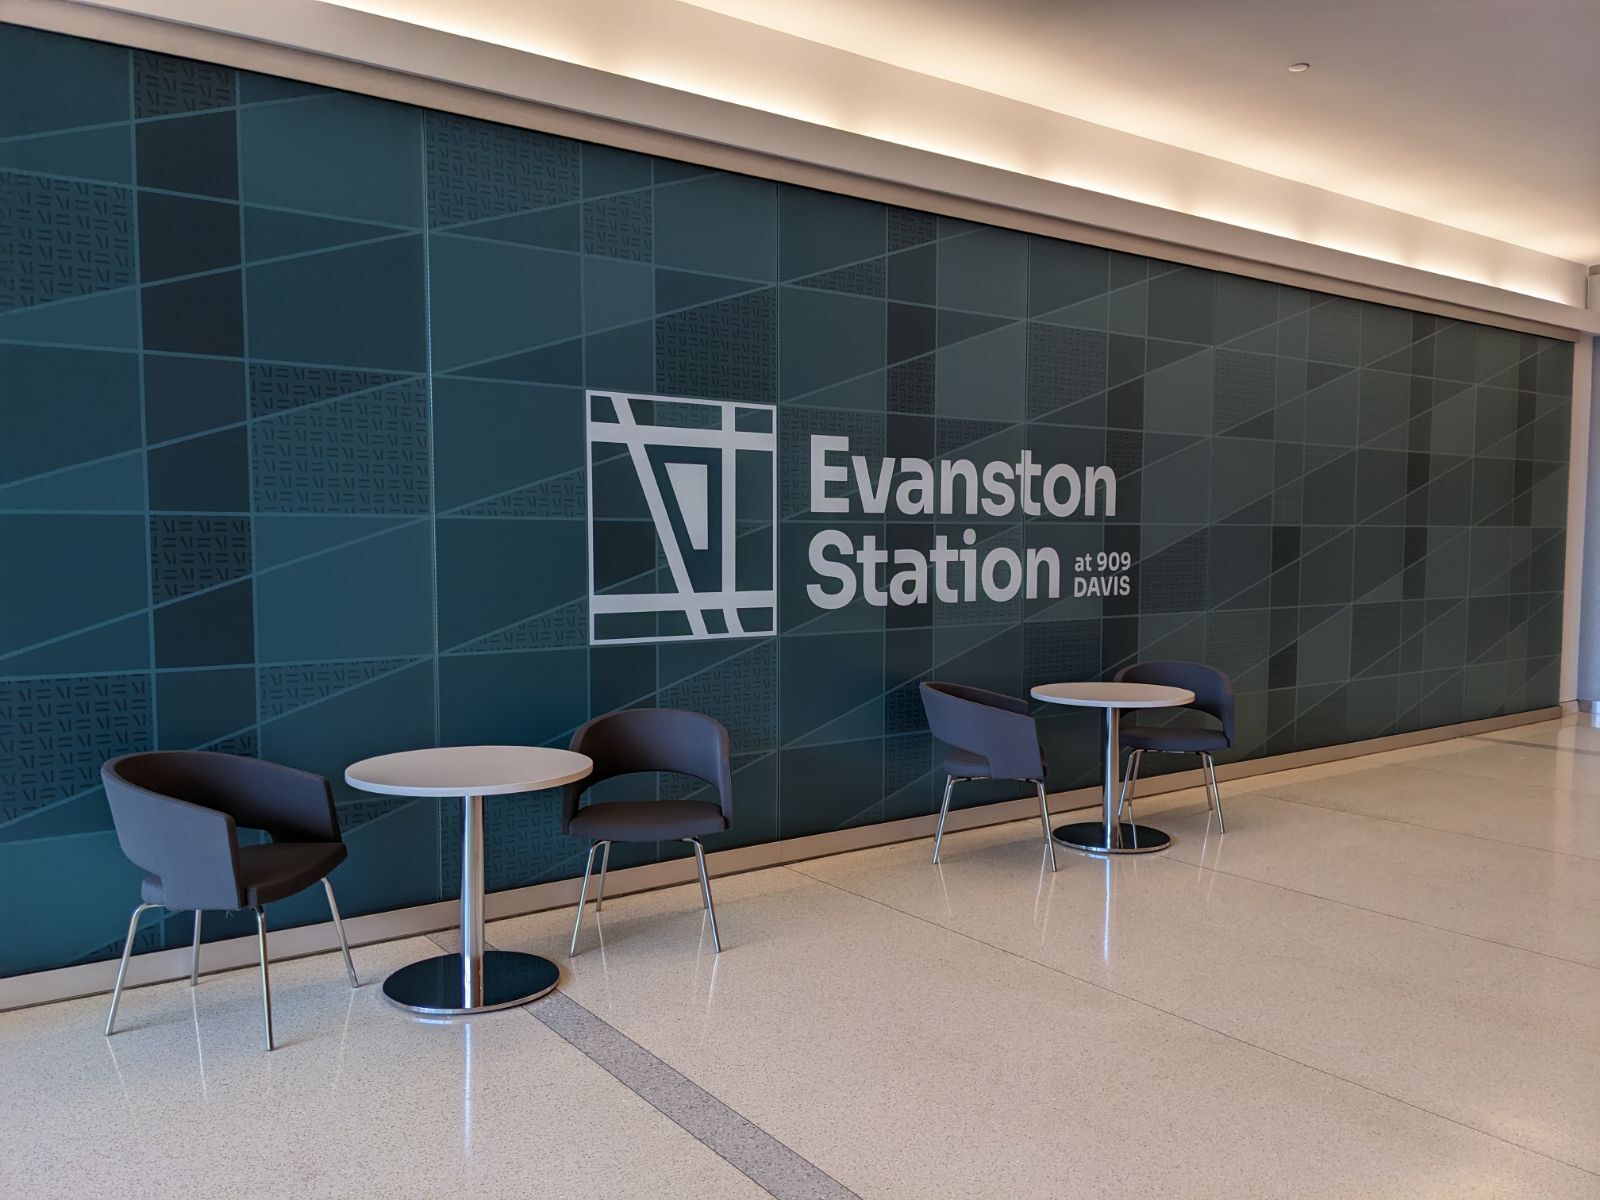 Custom Window Film Mural Brings Life to Evanston Station at 909 Davis